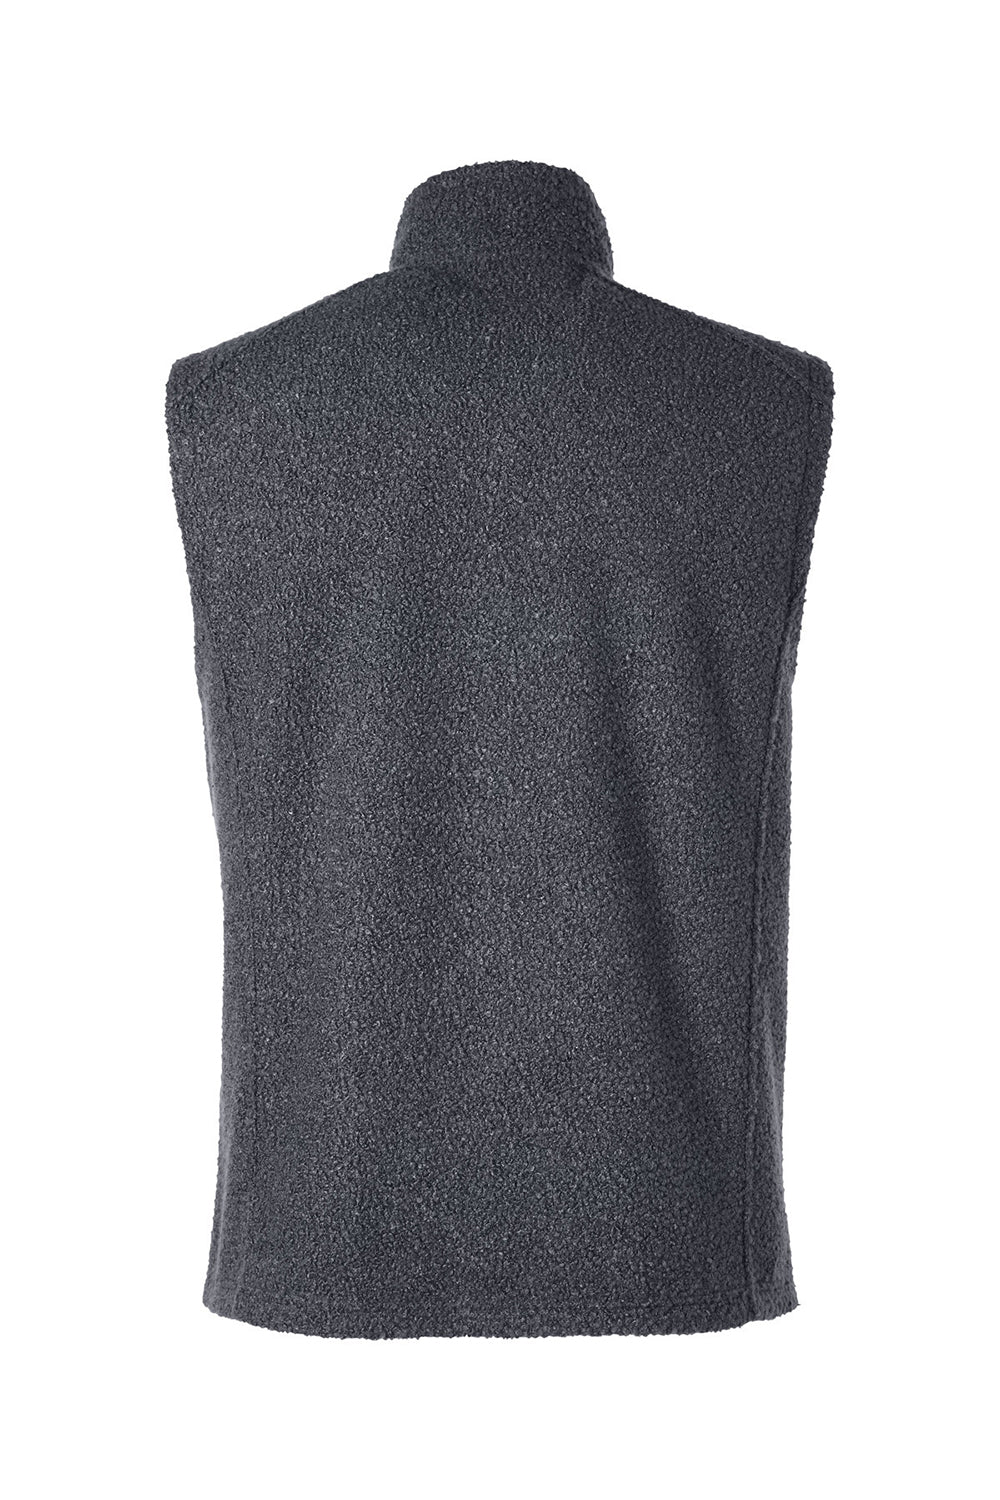 North End NE714 Mens Aura Sweater Fleece Full Zip Vest Carbon Grey Flat Back